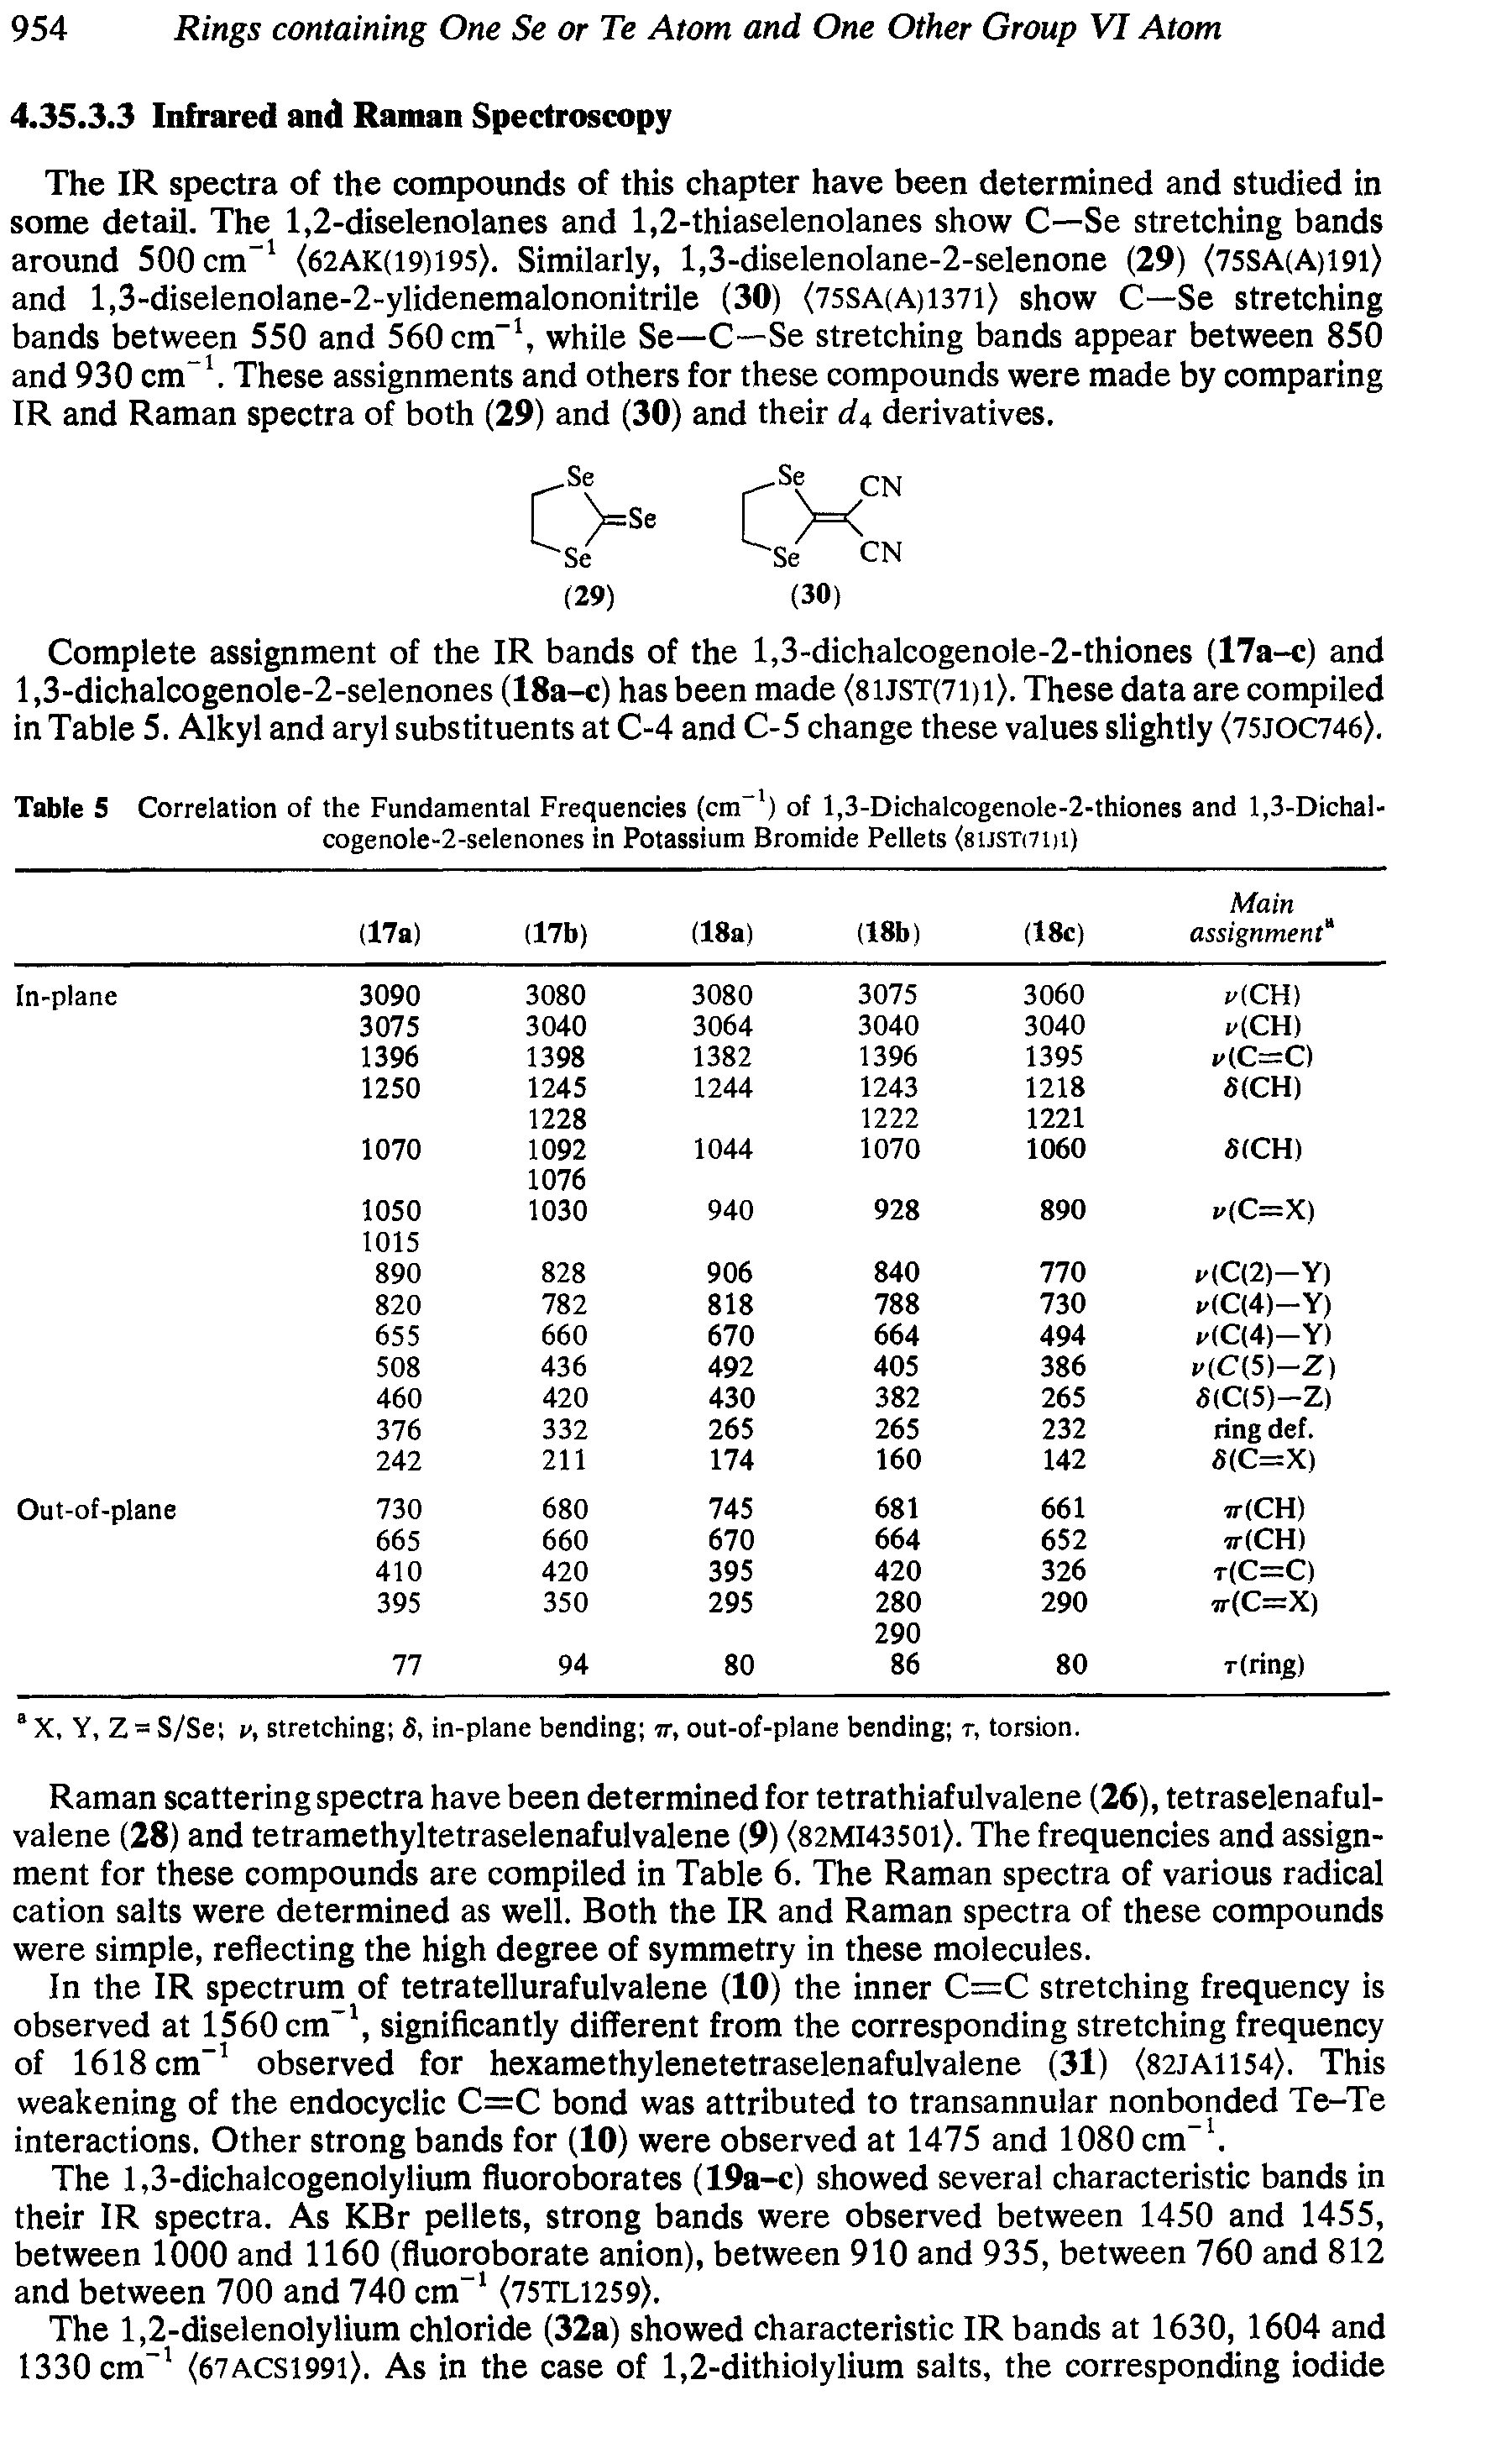 Table 5 Correlation of the Fundamental Frequencies (cm ) of l,3-Dichalcogenole-2-thiones and 1,3-Dichal-cogenole-2-selenones in Potassium Bromide Pellets (81jst<71)1)...